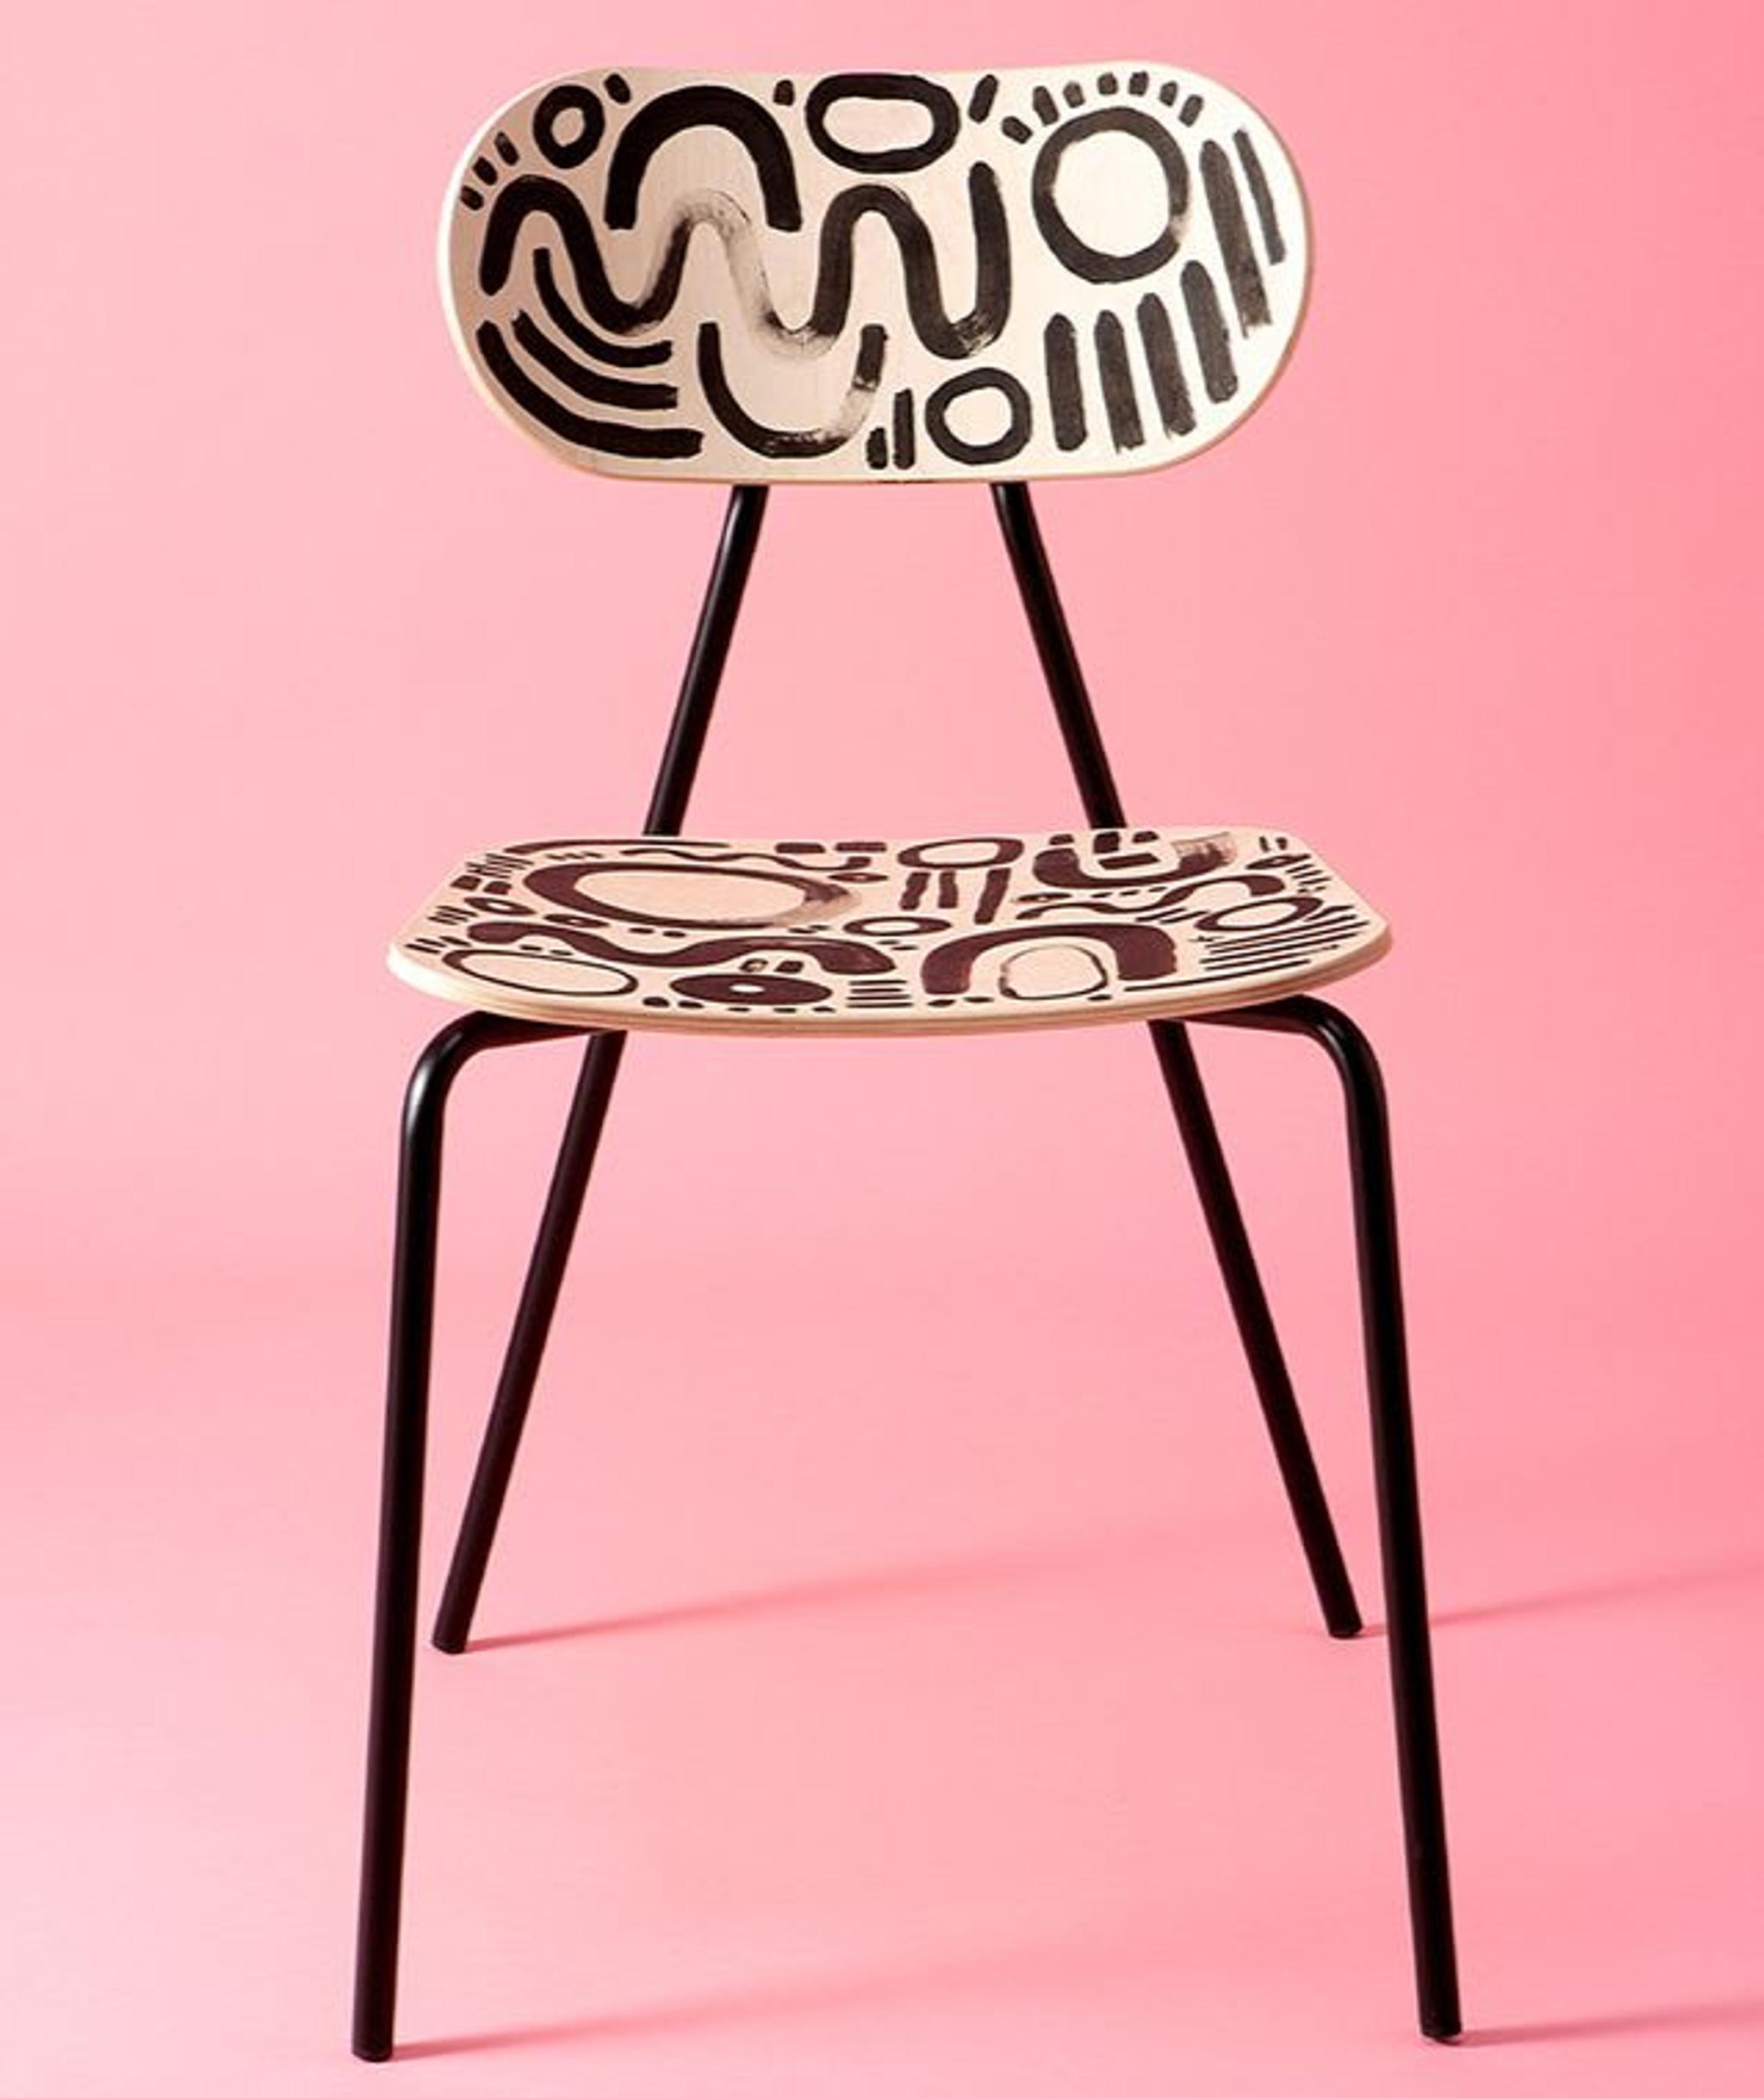 Lombrello Chair By Andrea Forapani And Tania Grace Knuckey - Lombrello